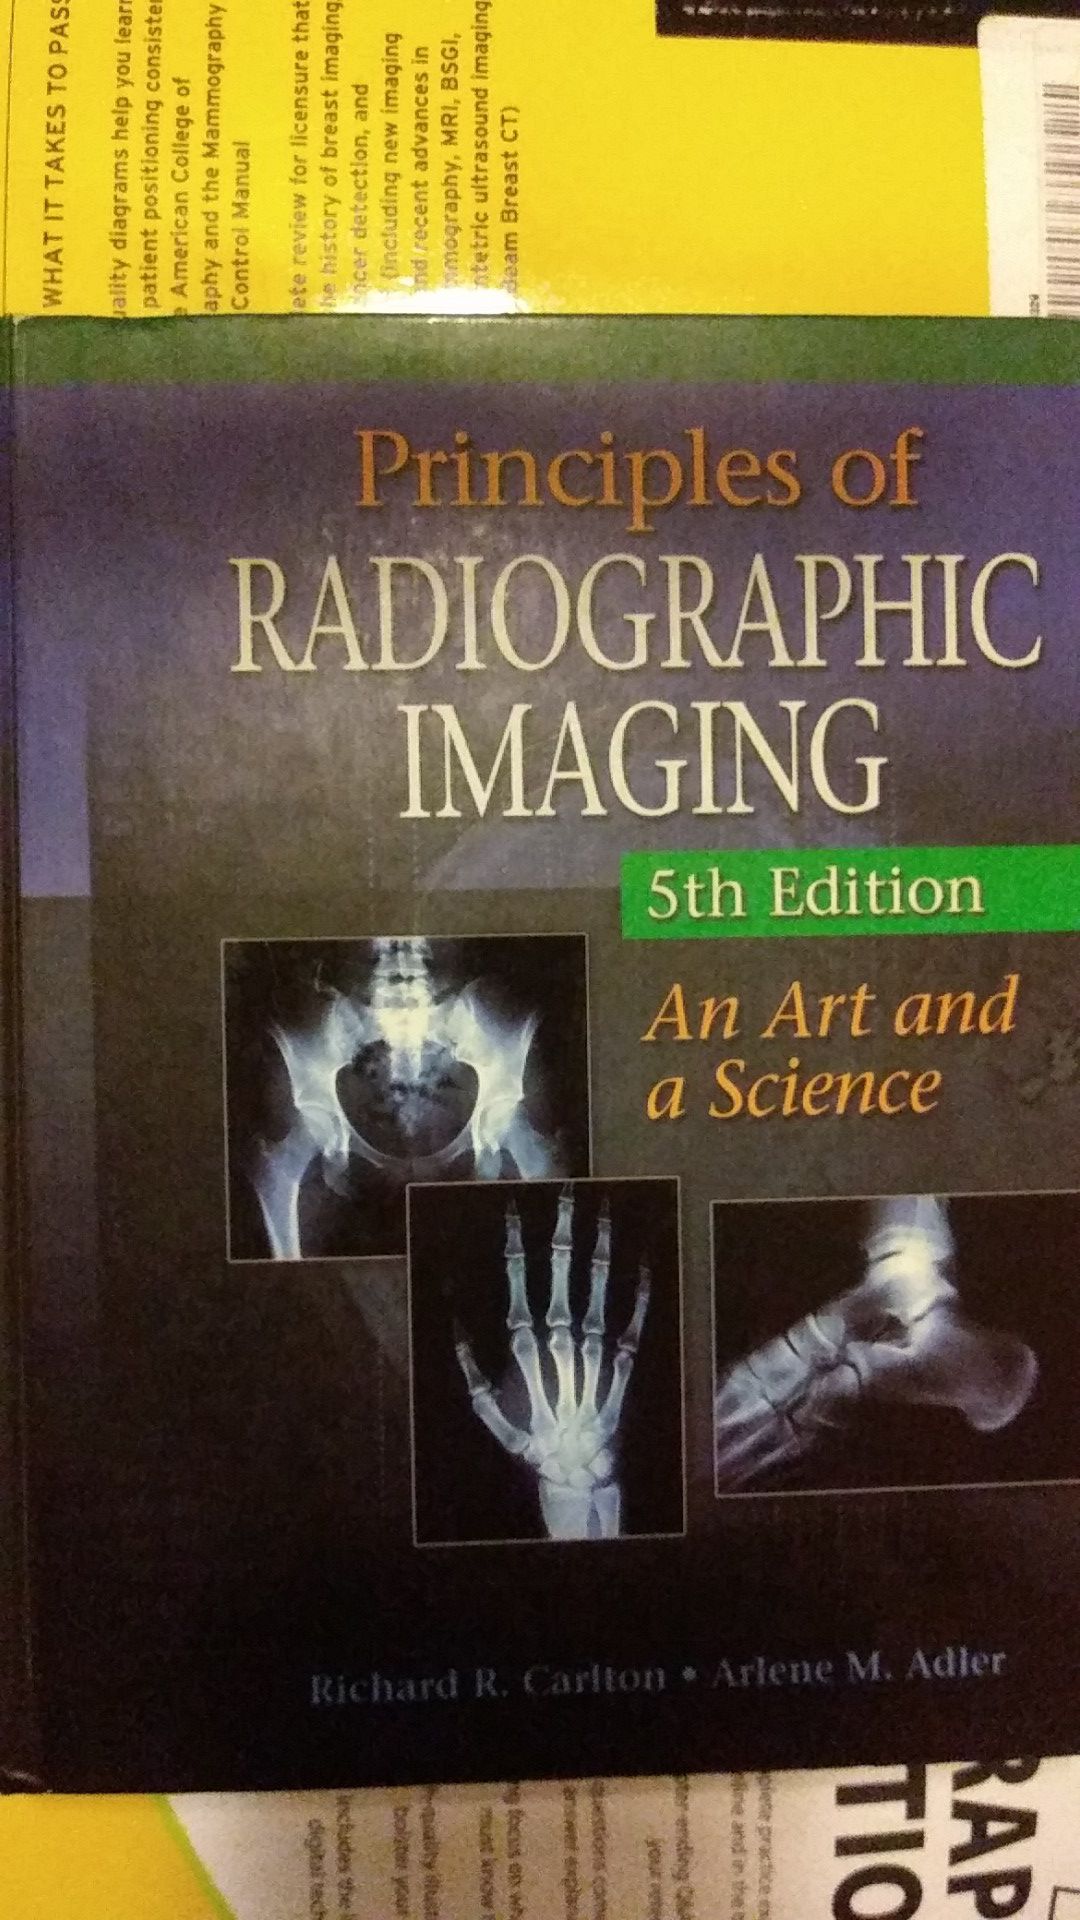 Principles of Radiographic Imaging, 5th ed.